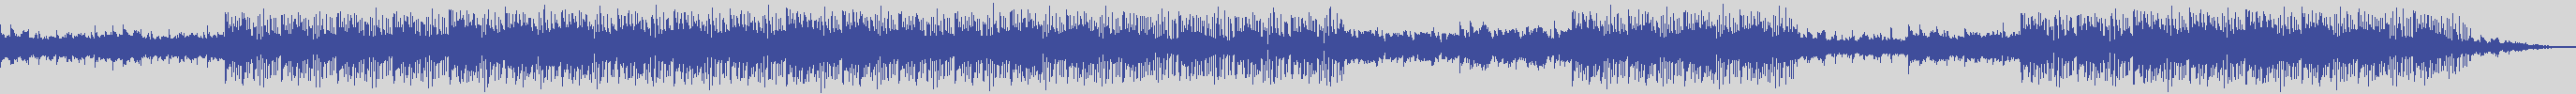 noclouds_chillout [NOC128] Square 22 - Pin [Original Mix] audio wave form